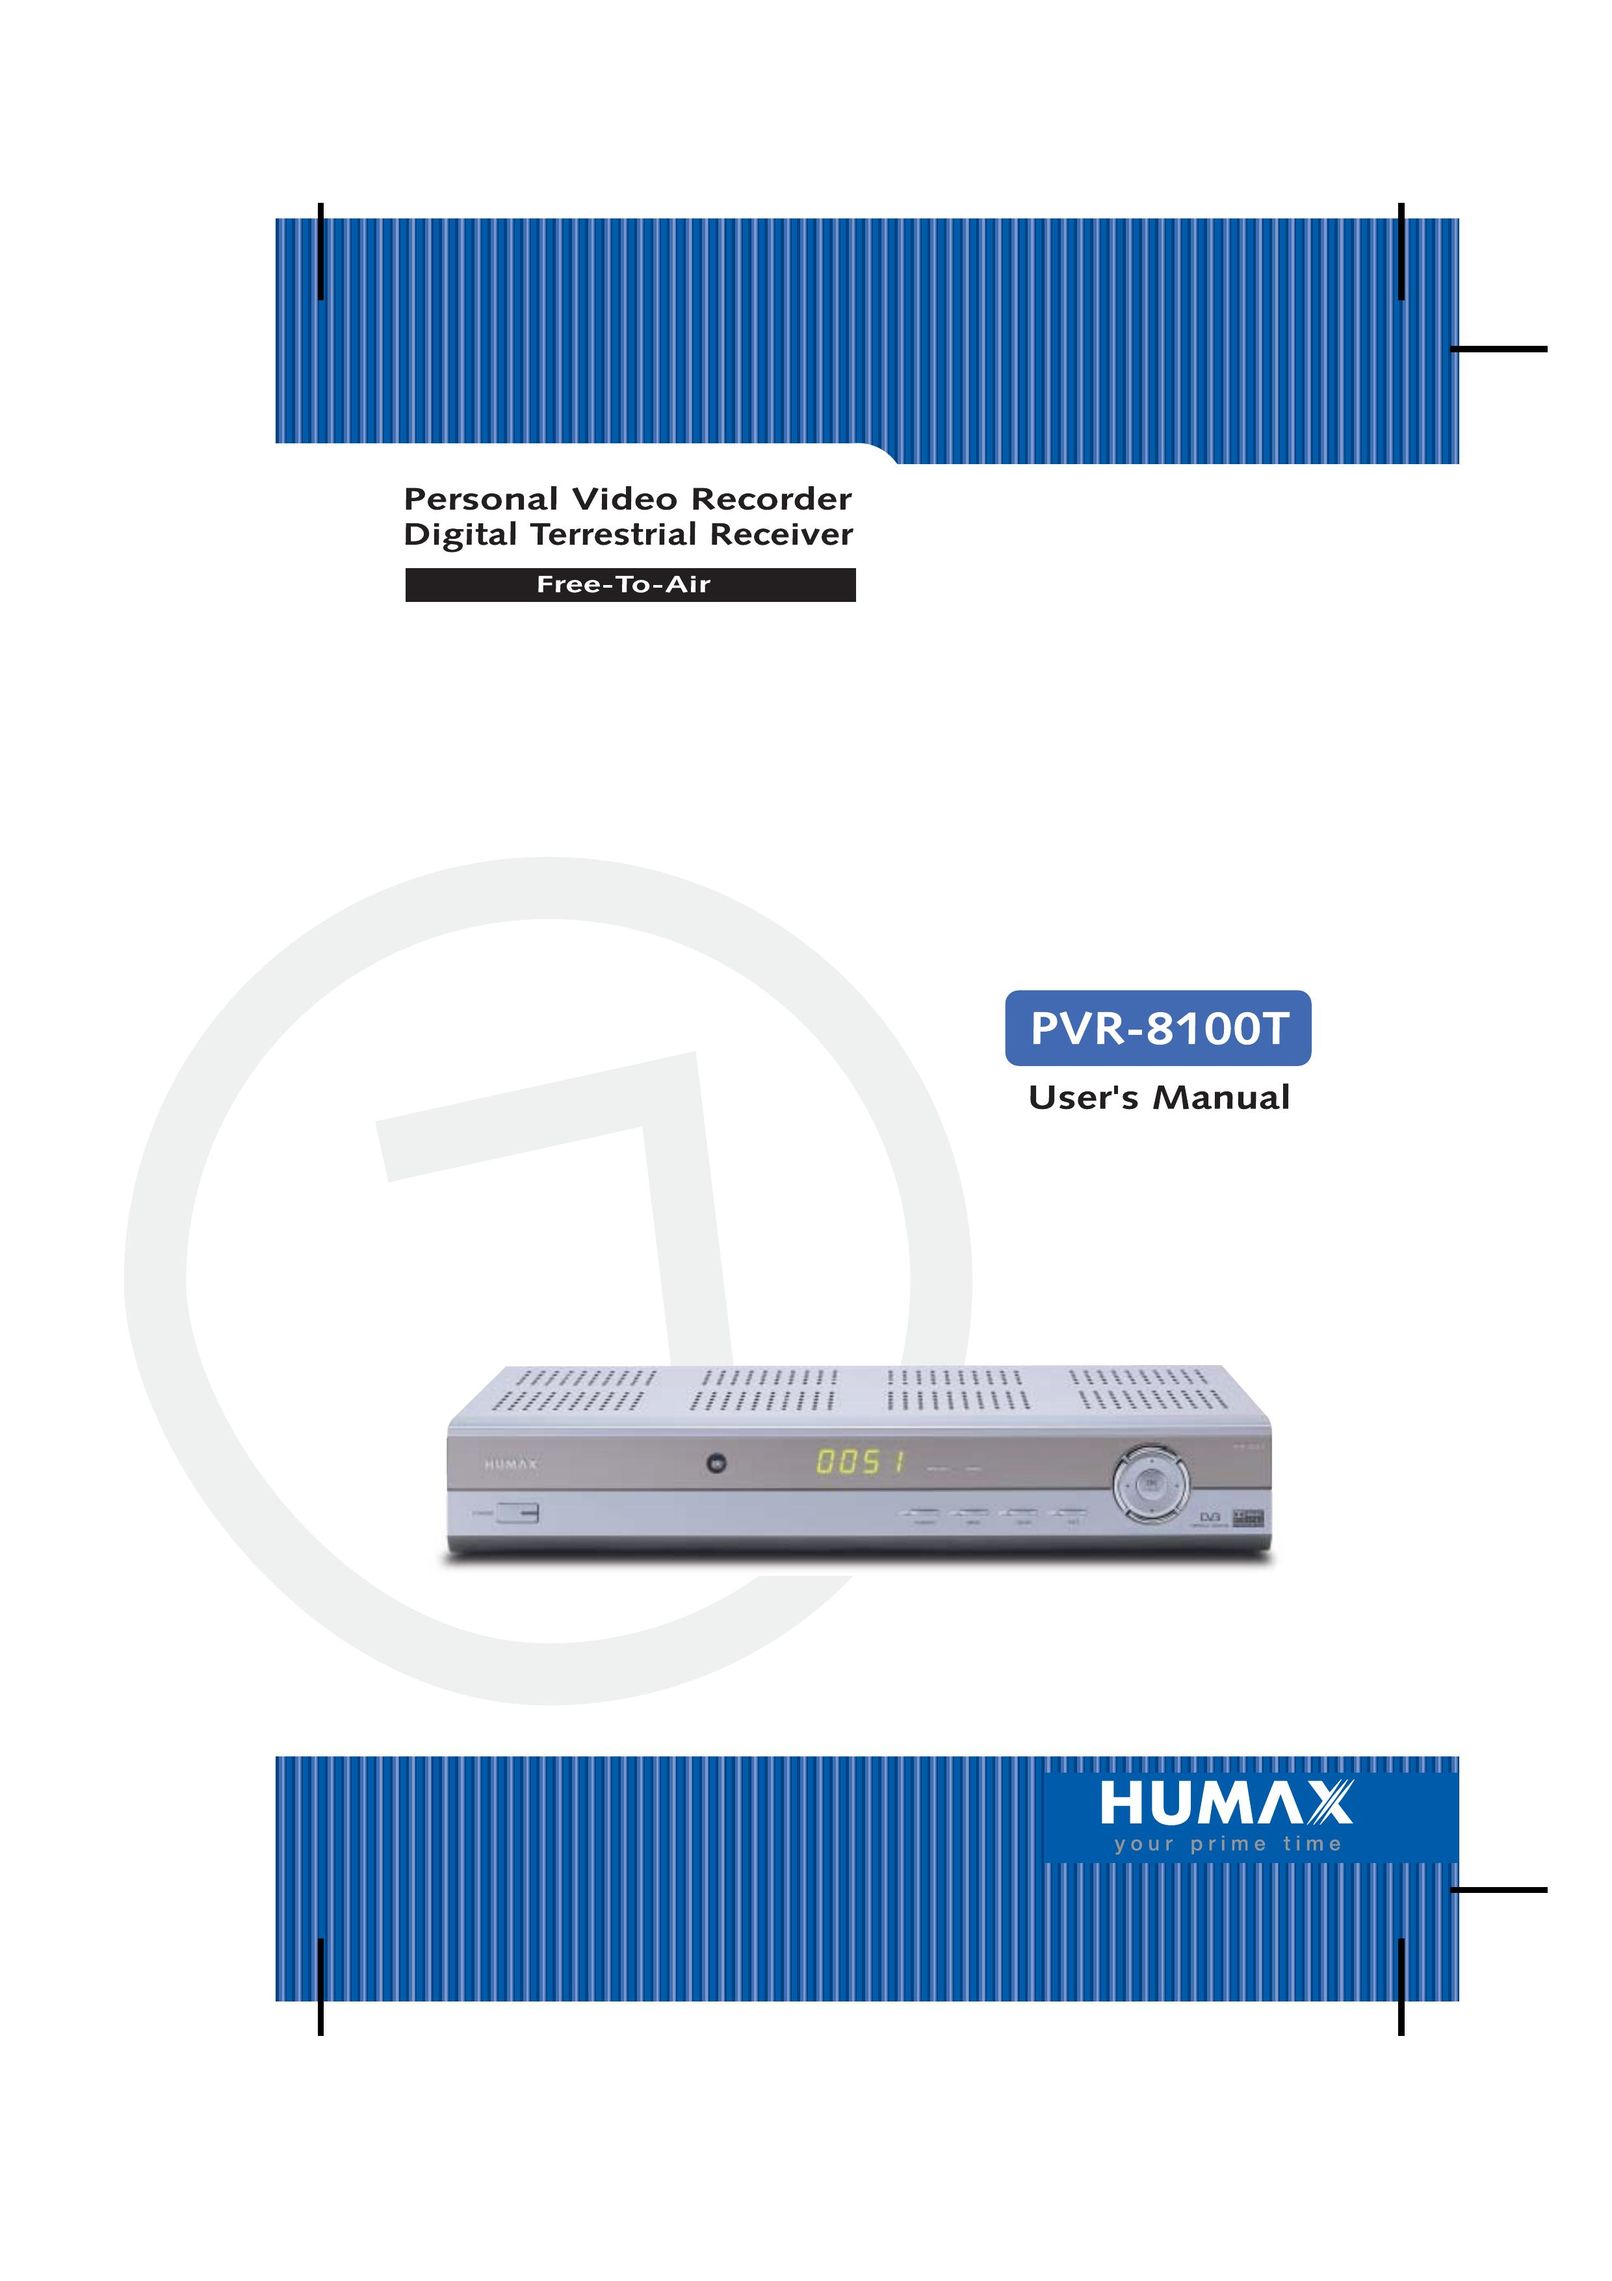 Humax PVR-8100T DVR User Manual